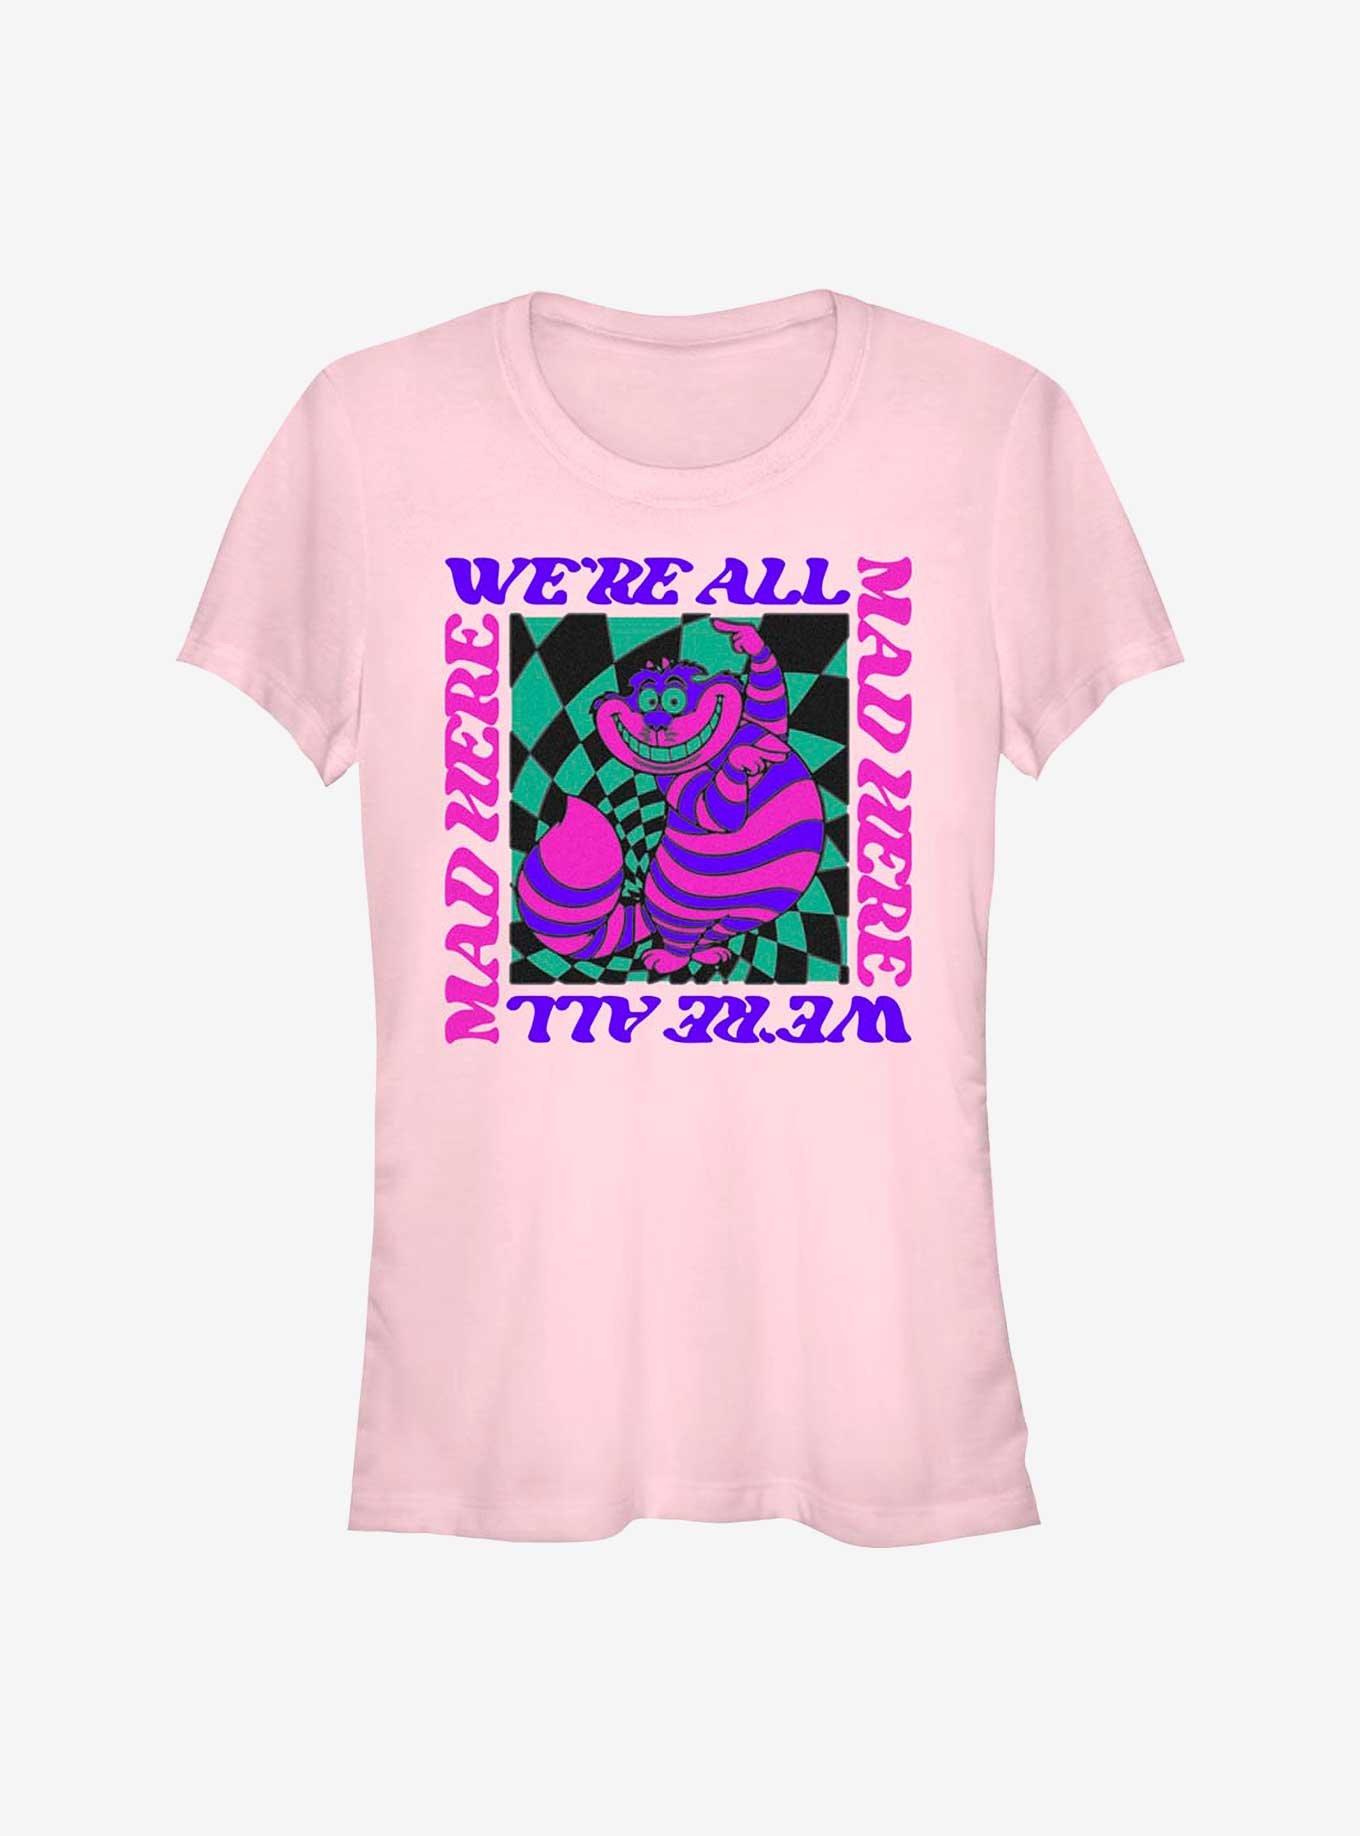 Disney Alice In Wonderland All Mad Trippy Cheshire Girls T-Shirt, LIGHT PINK, hi-res